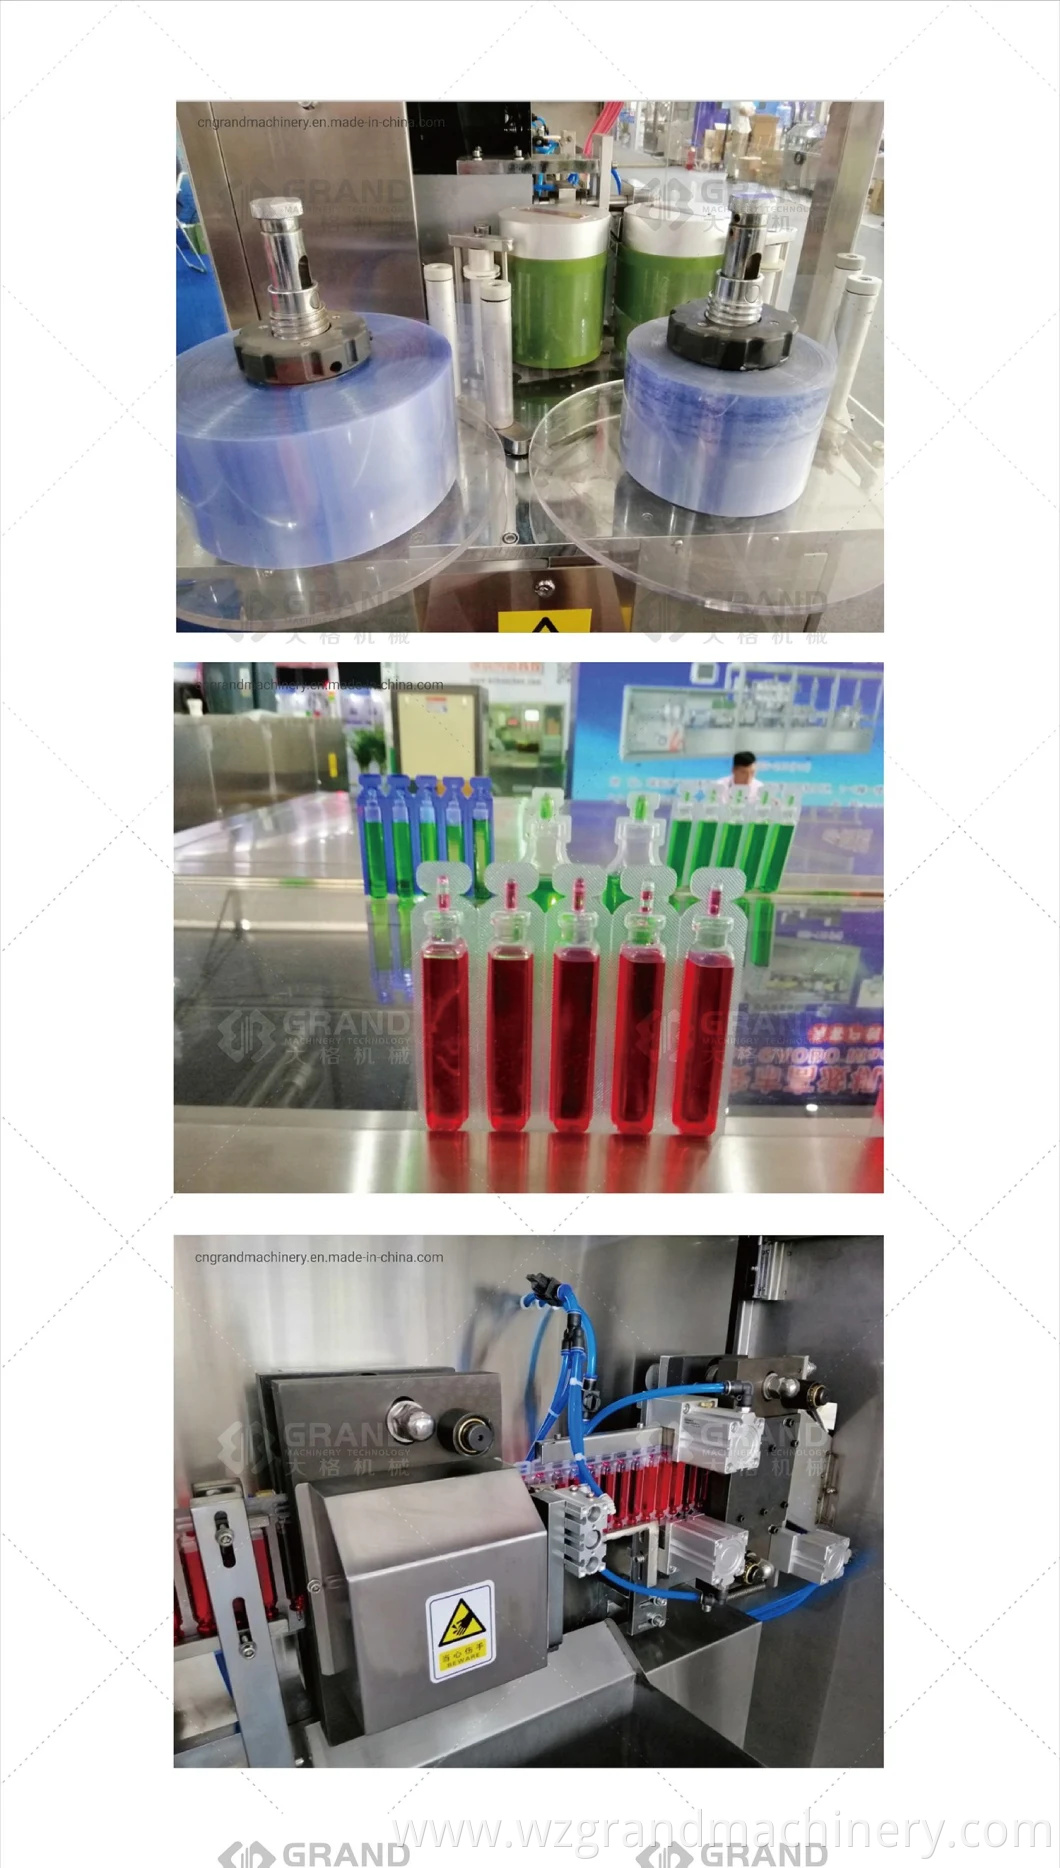 Ggs-118 P5 Plastic Ampule Liquid Forming Filling Sealing Machine for Pesticide/Oil/Oral Liquid/Medicine with Pm-100 Labeling Machinery